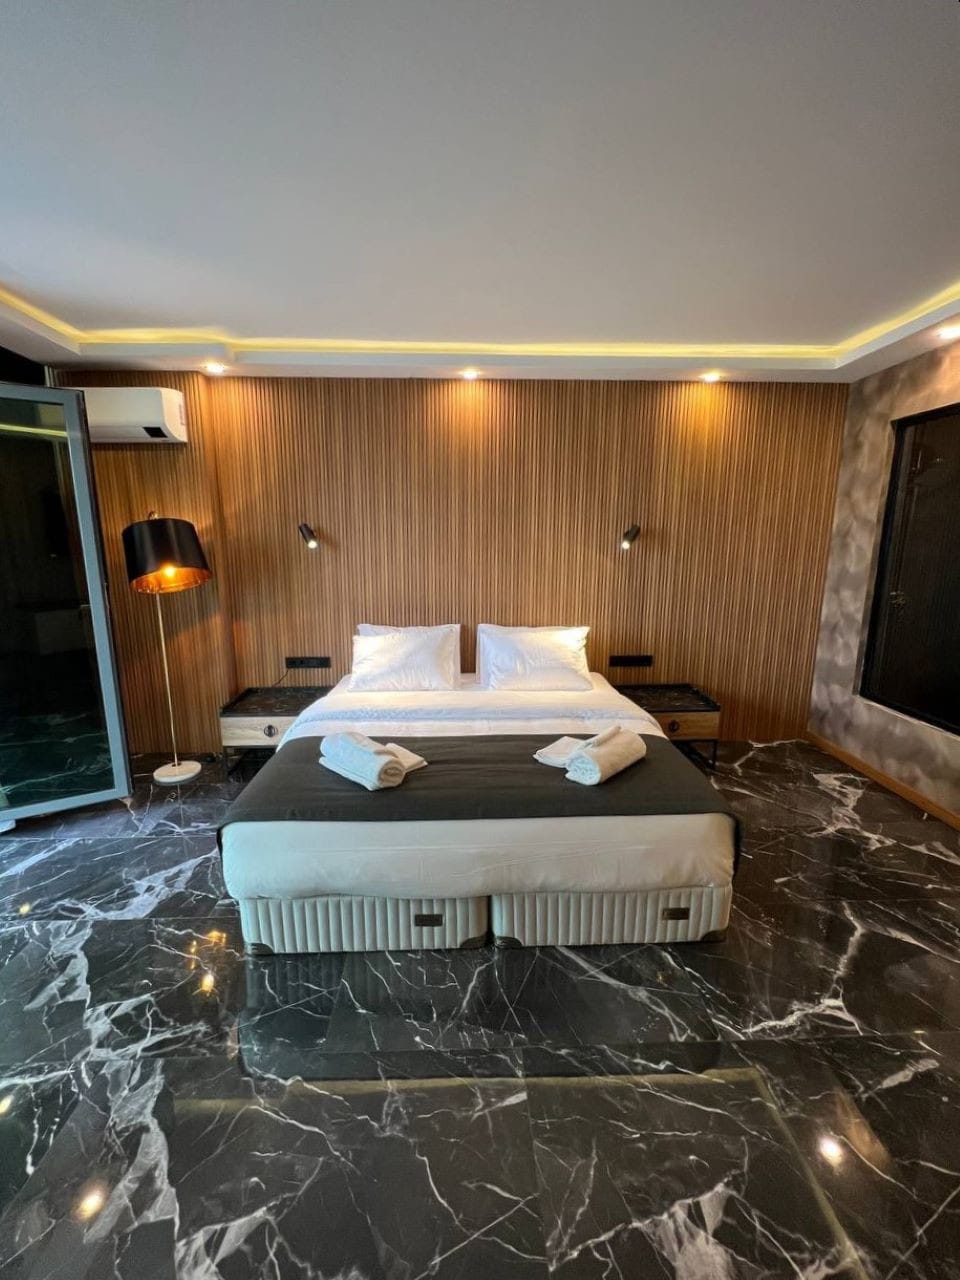 Executive Luxury Room